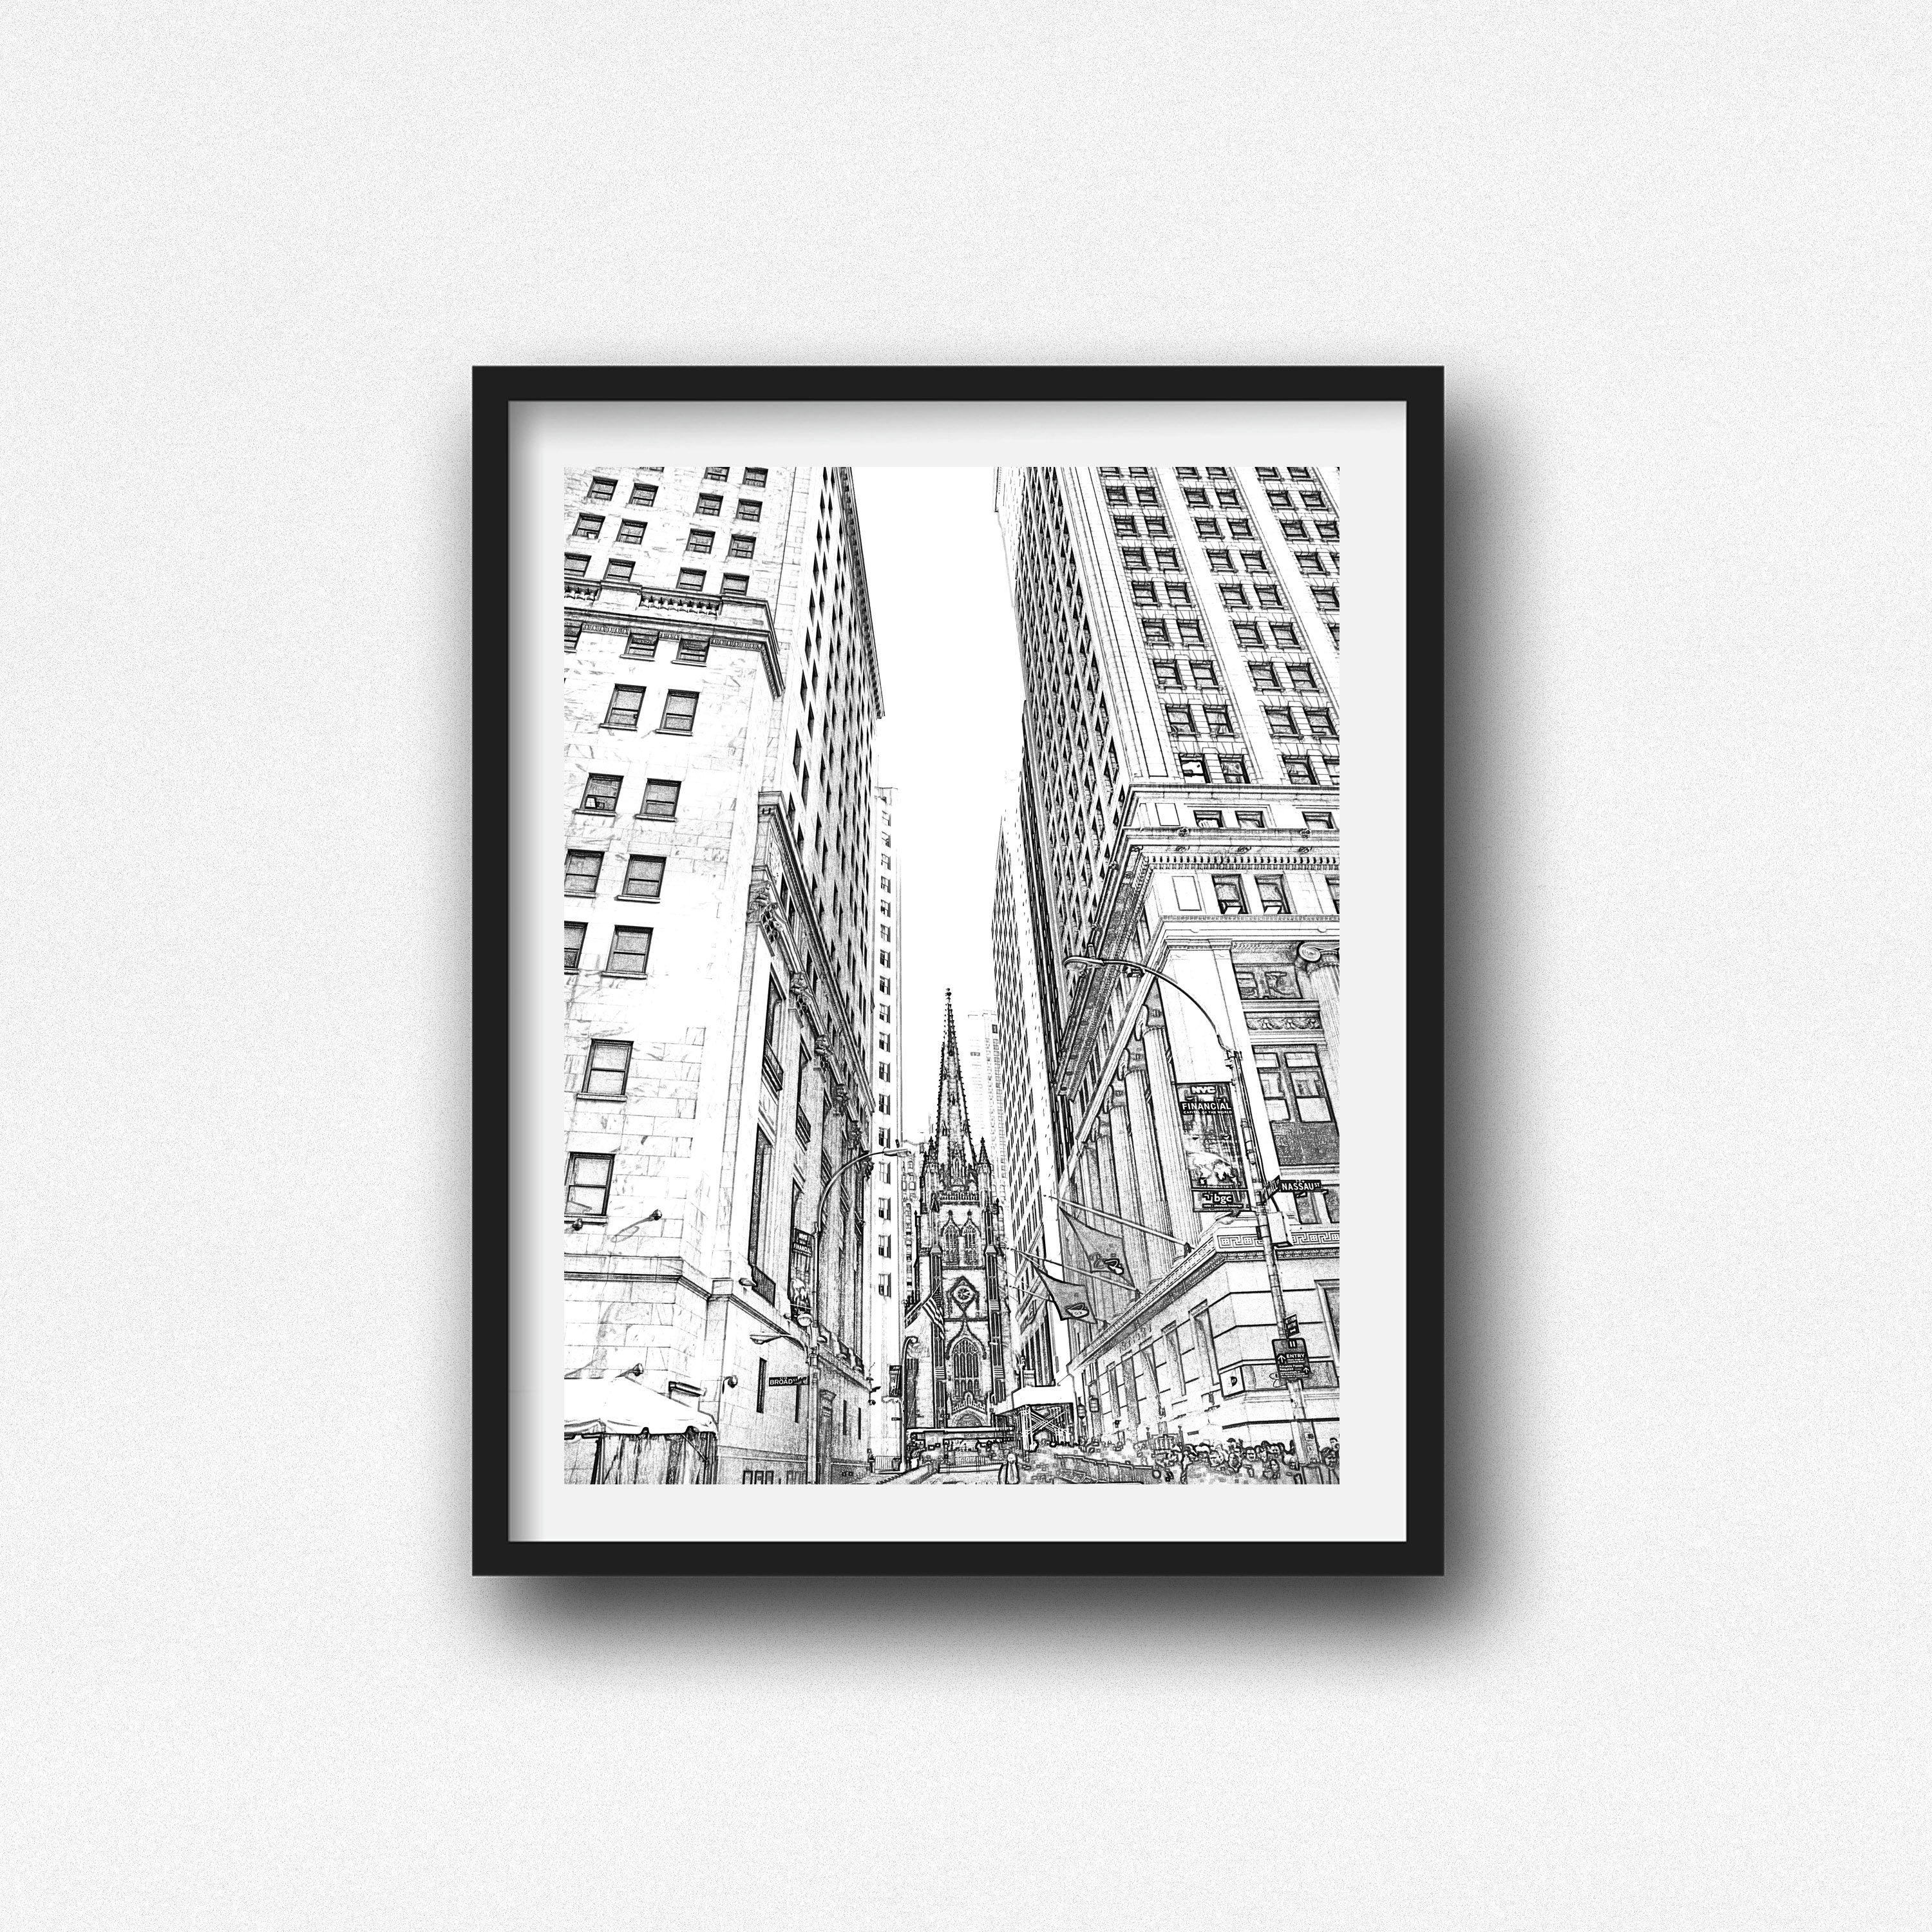 Artist Explores New York City Through Urban Sketching